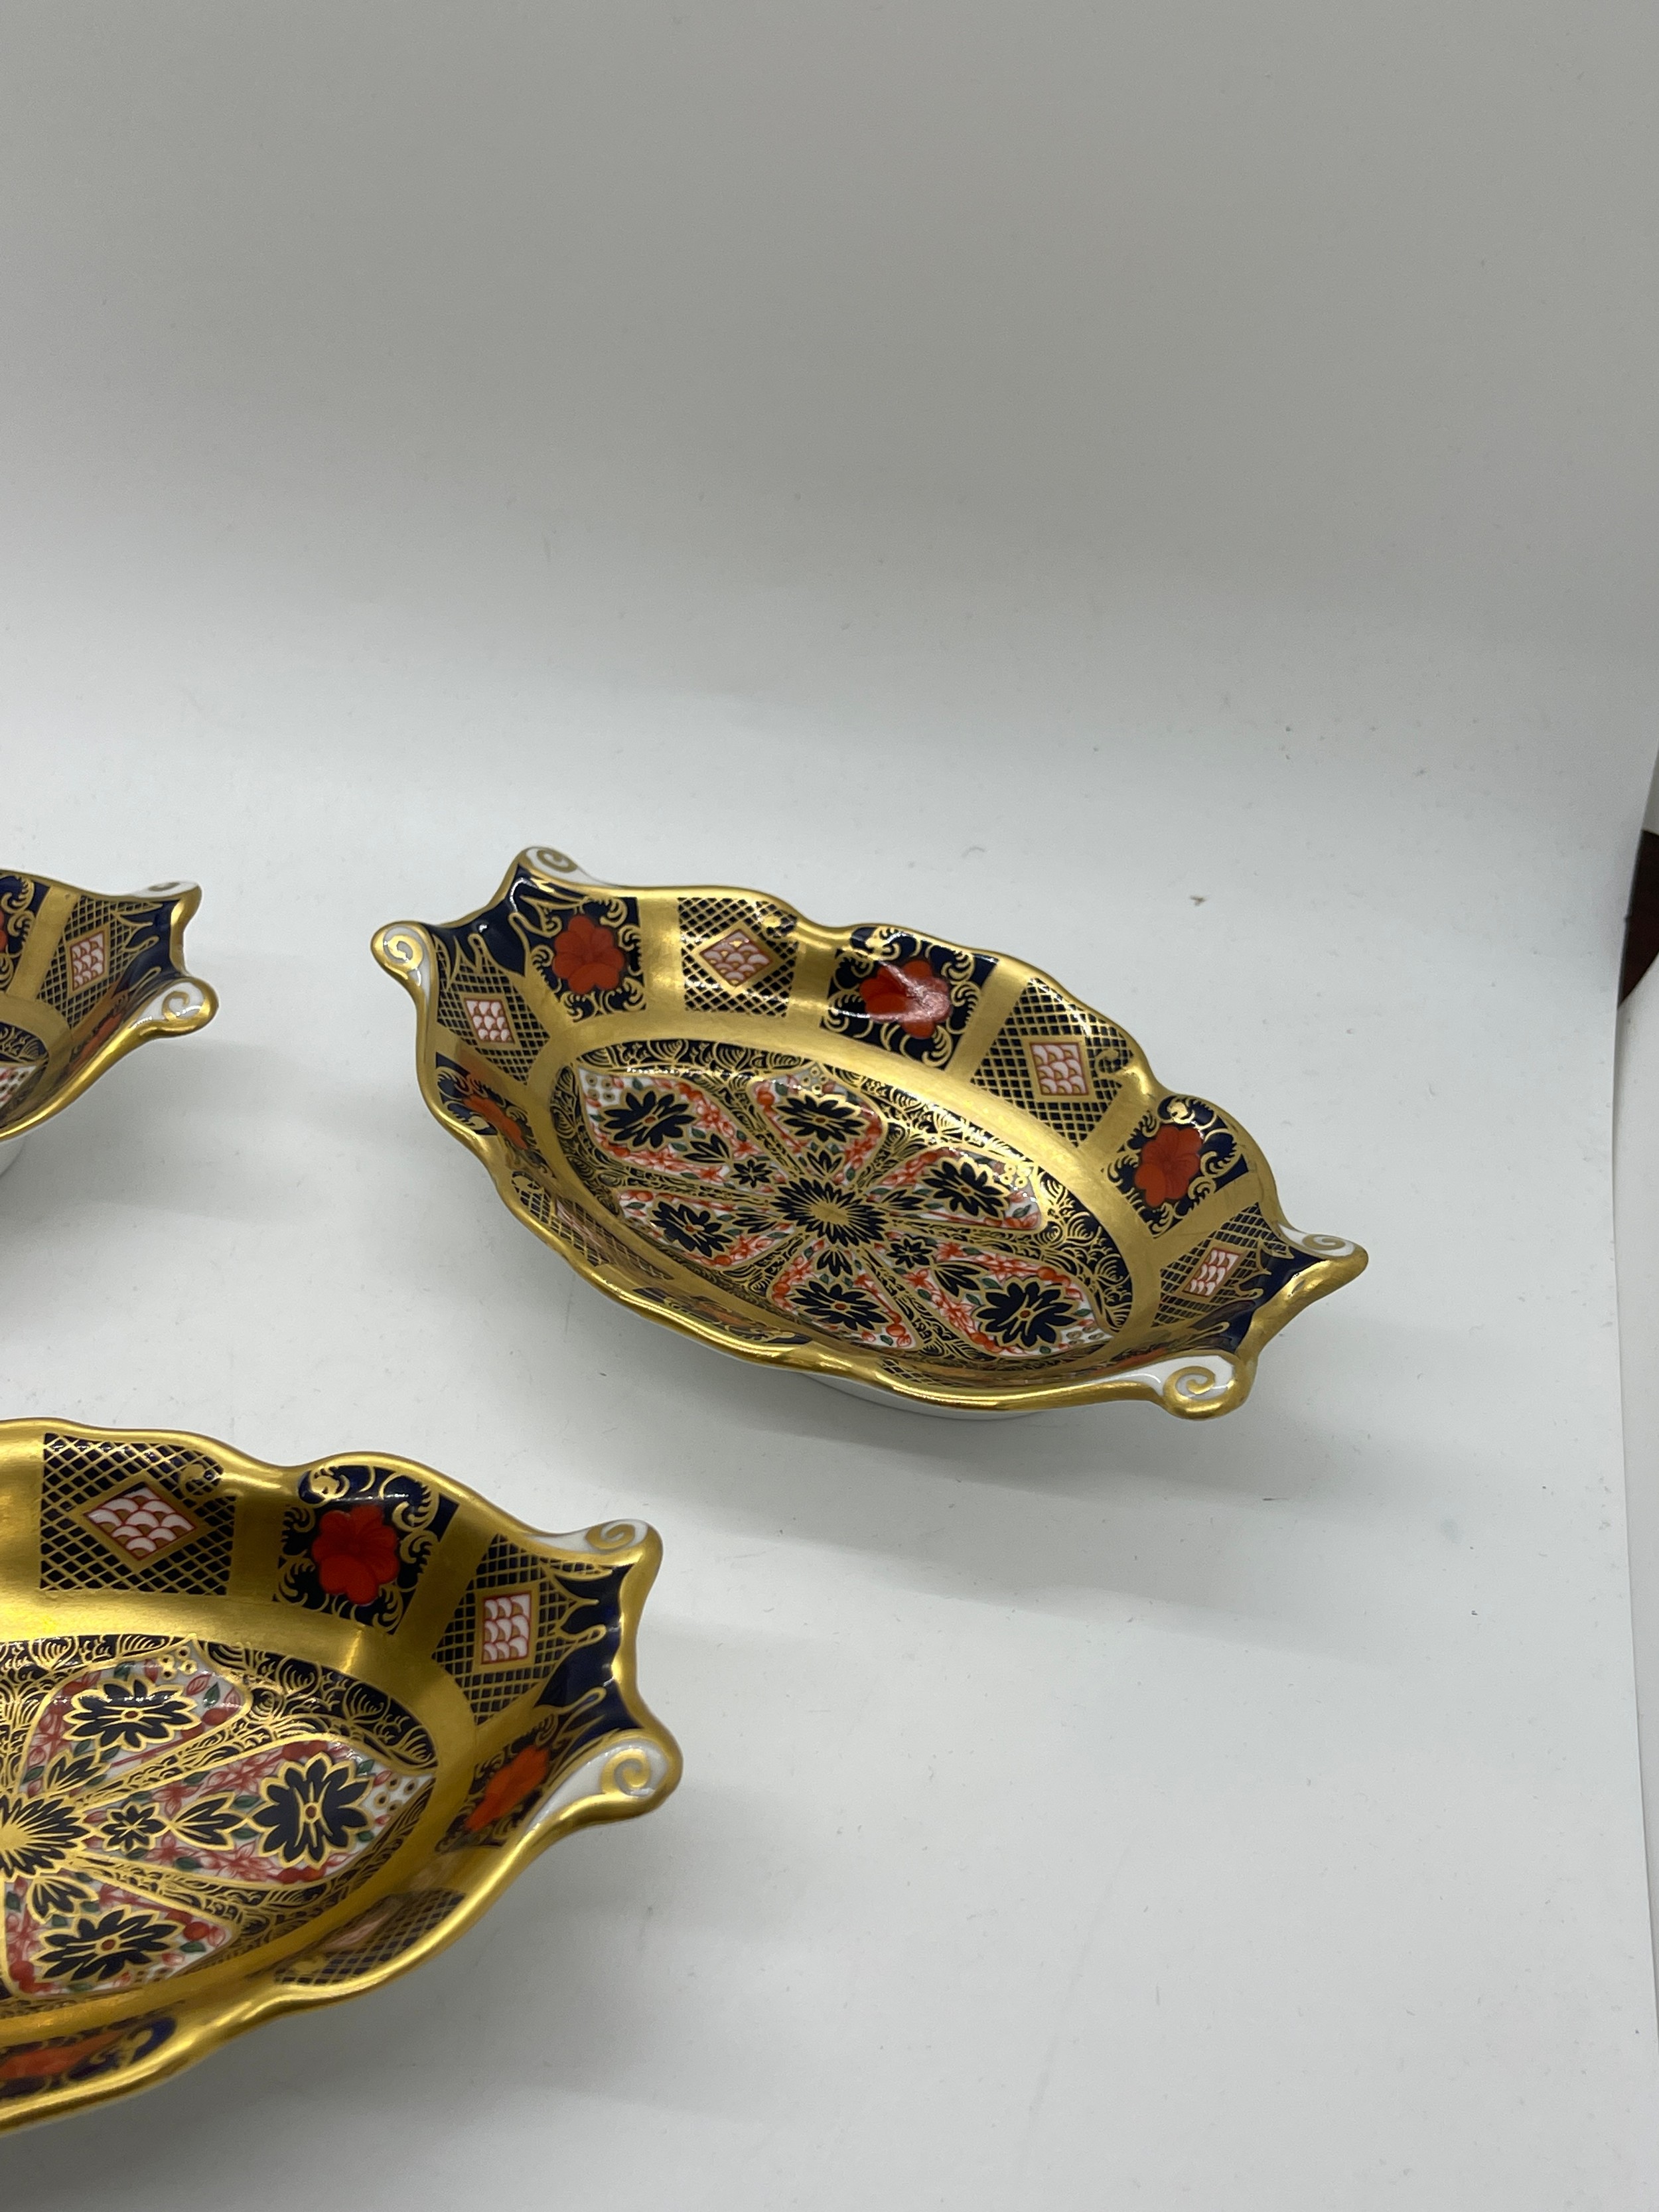 3 Miniature Royal Crown Derby Imari 1128 trays - Image 5 of 5